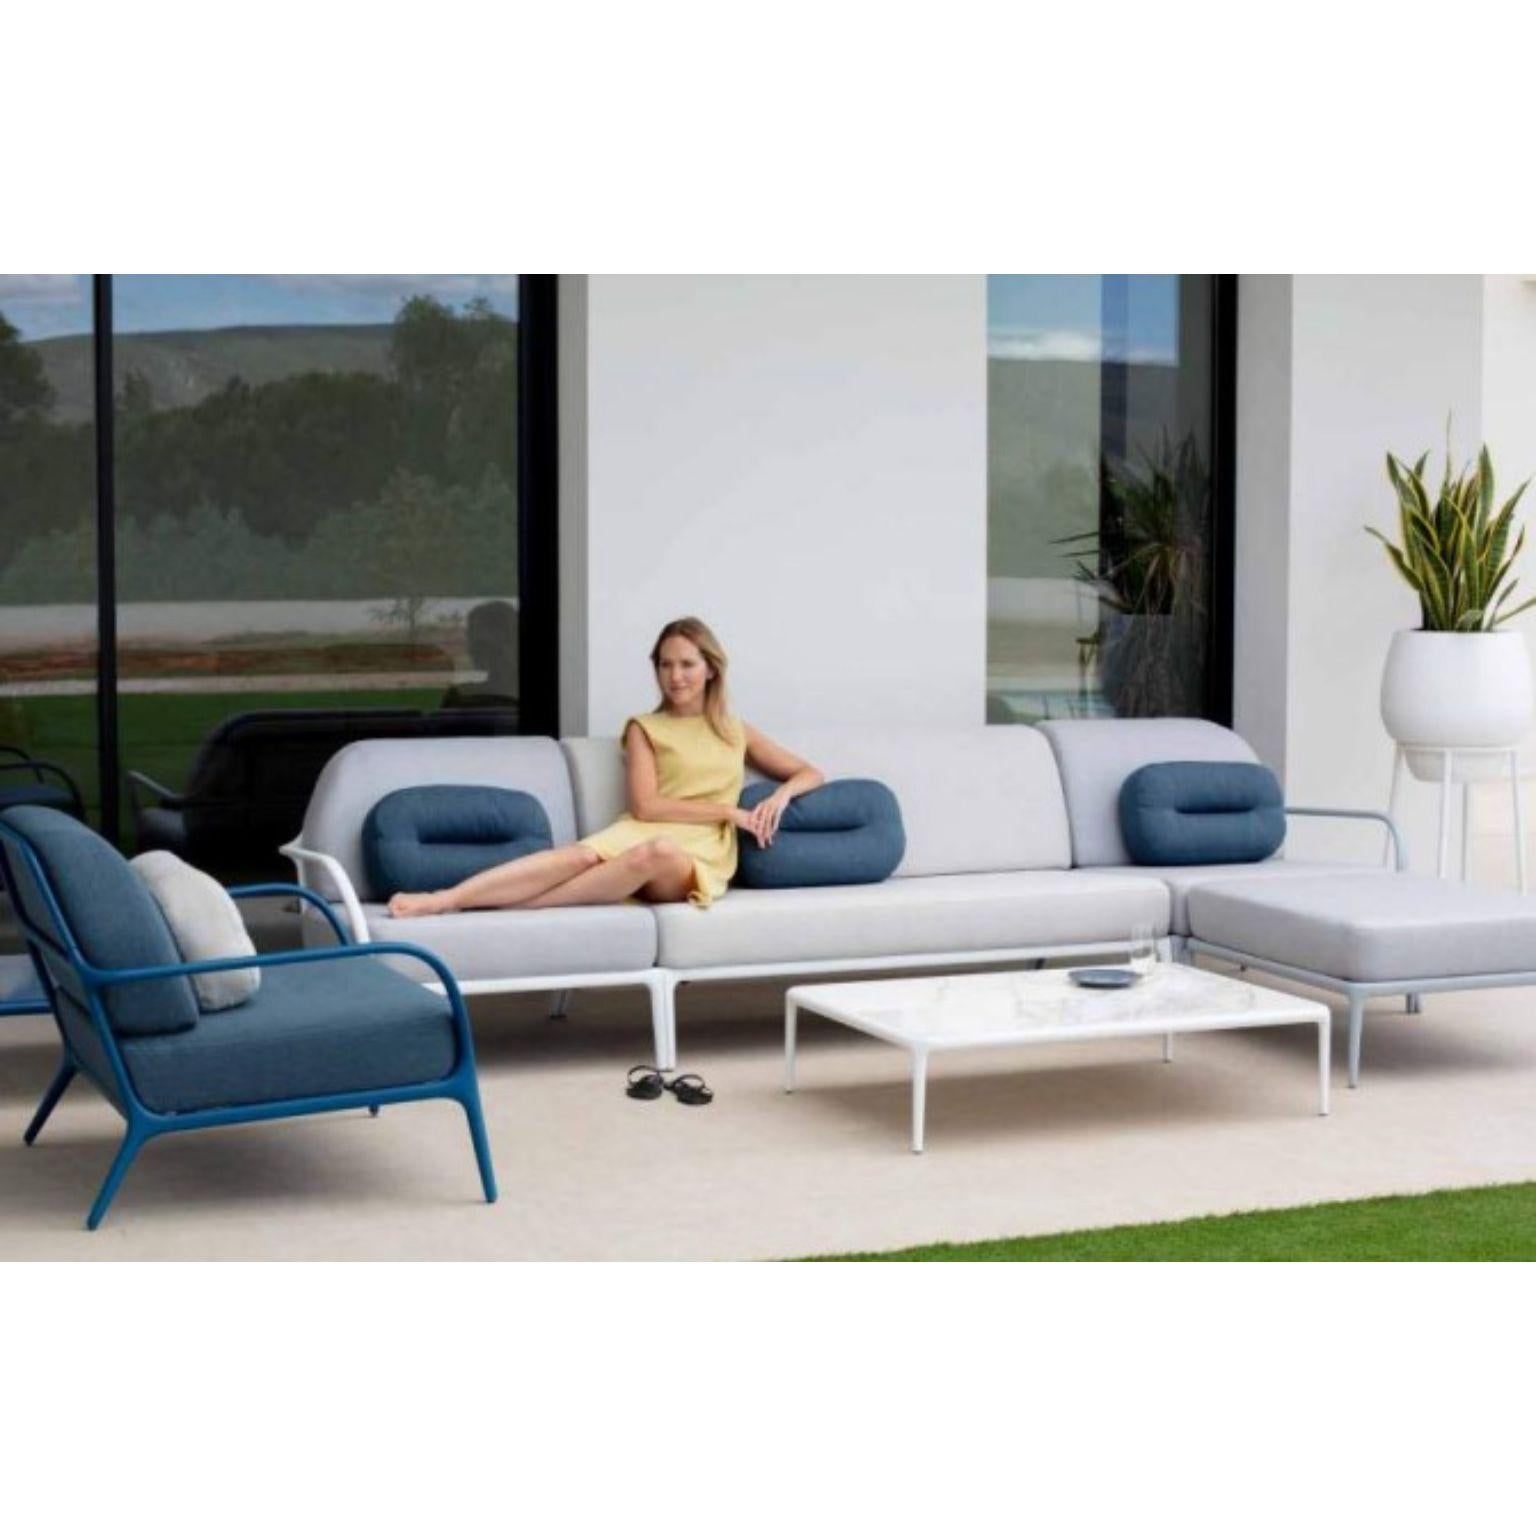 Post-Modern Xaloc Central 90 White Modular Sofa by Mowee